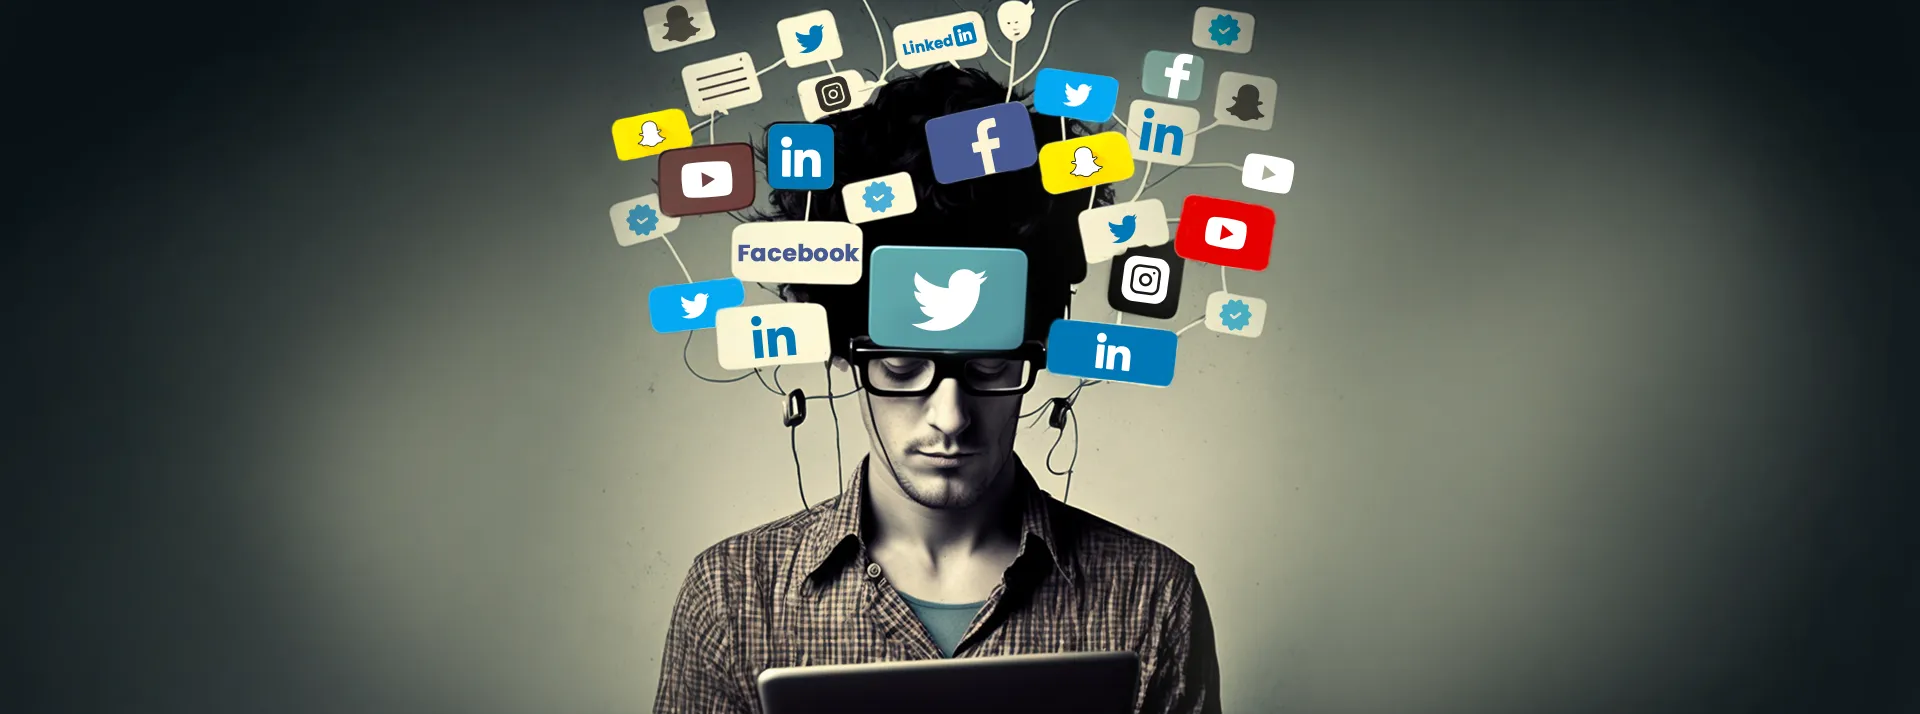 Social Media Strategy for B2B